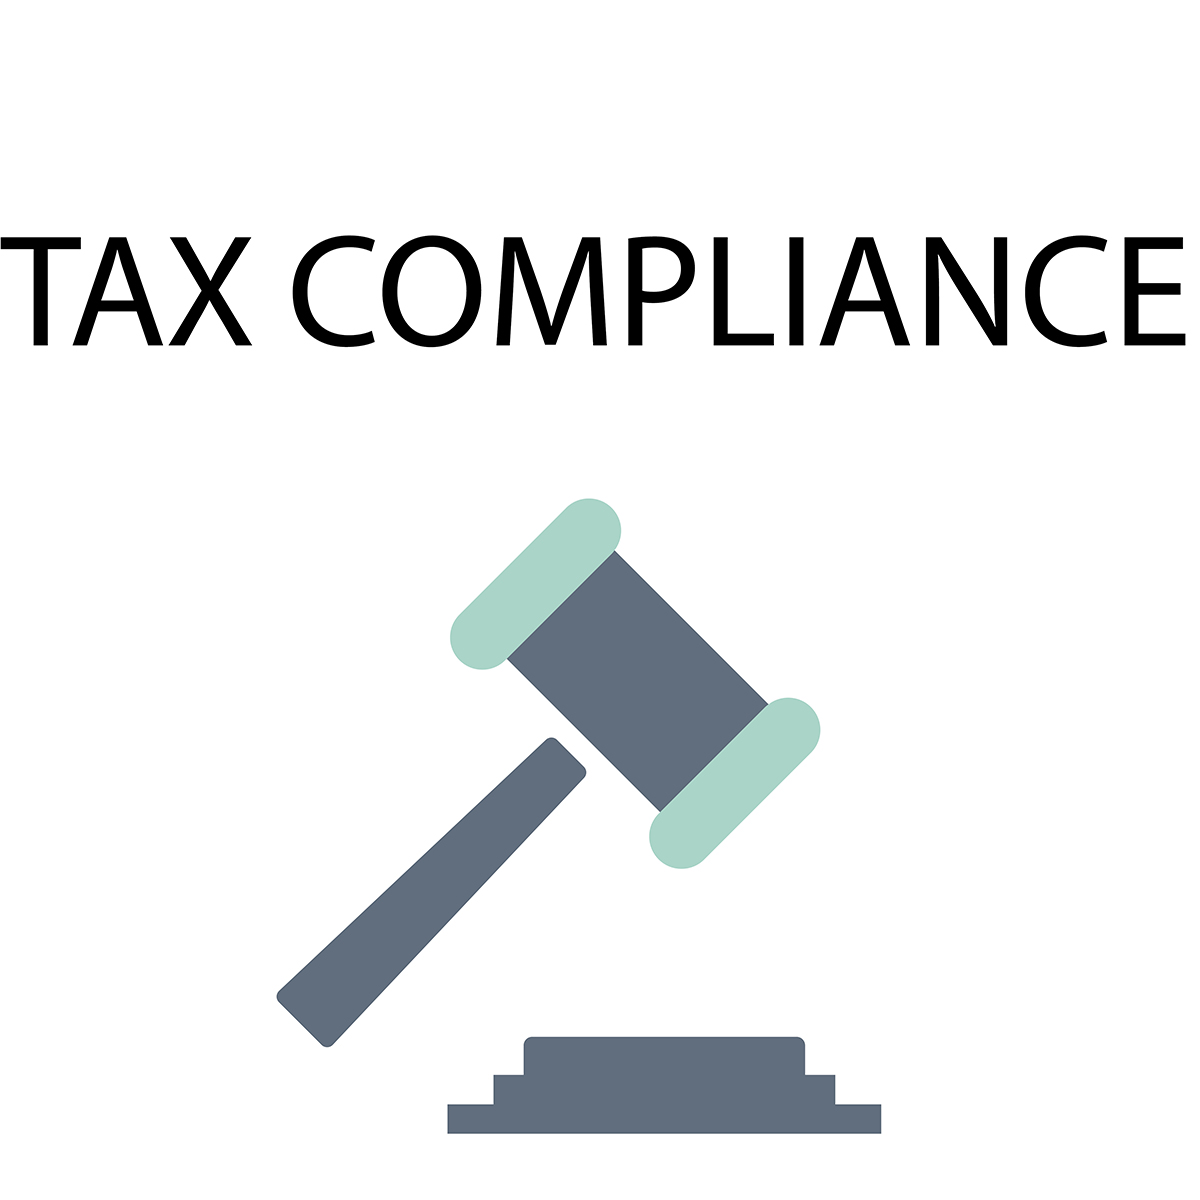 Tax Compliance<br />
